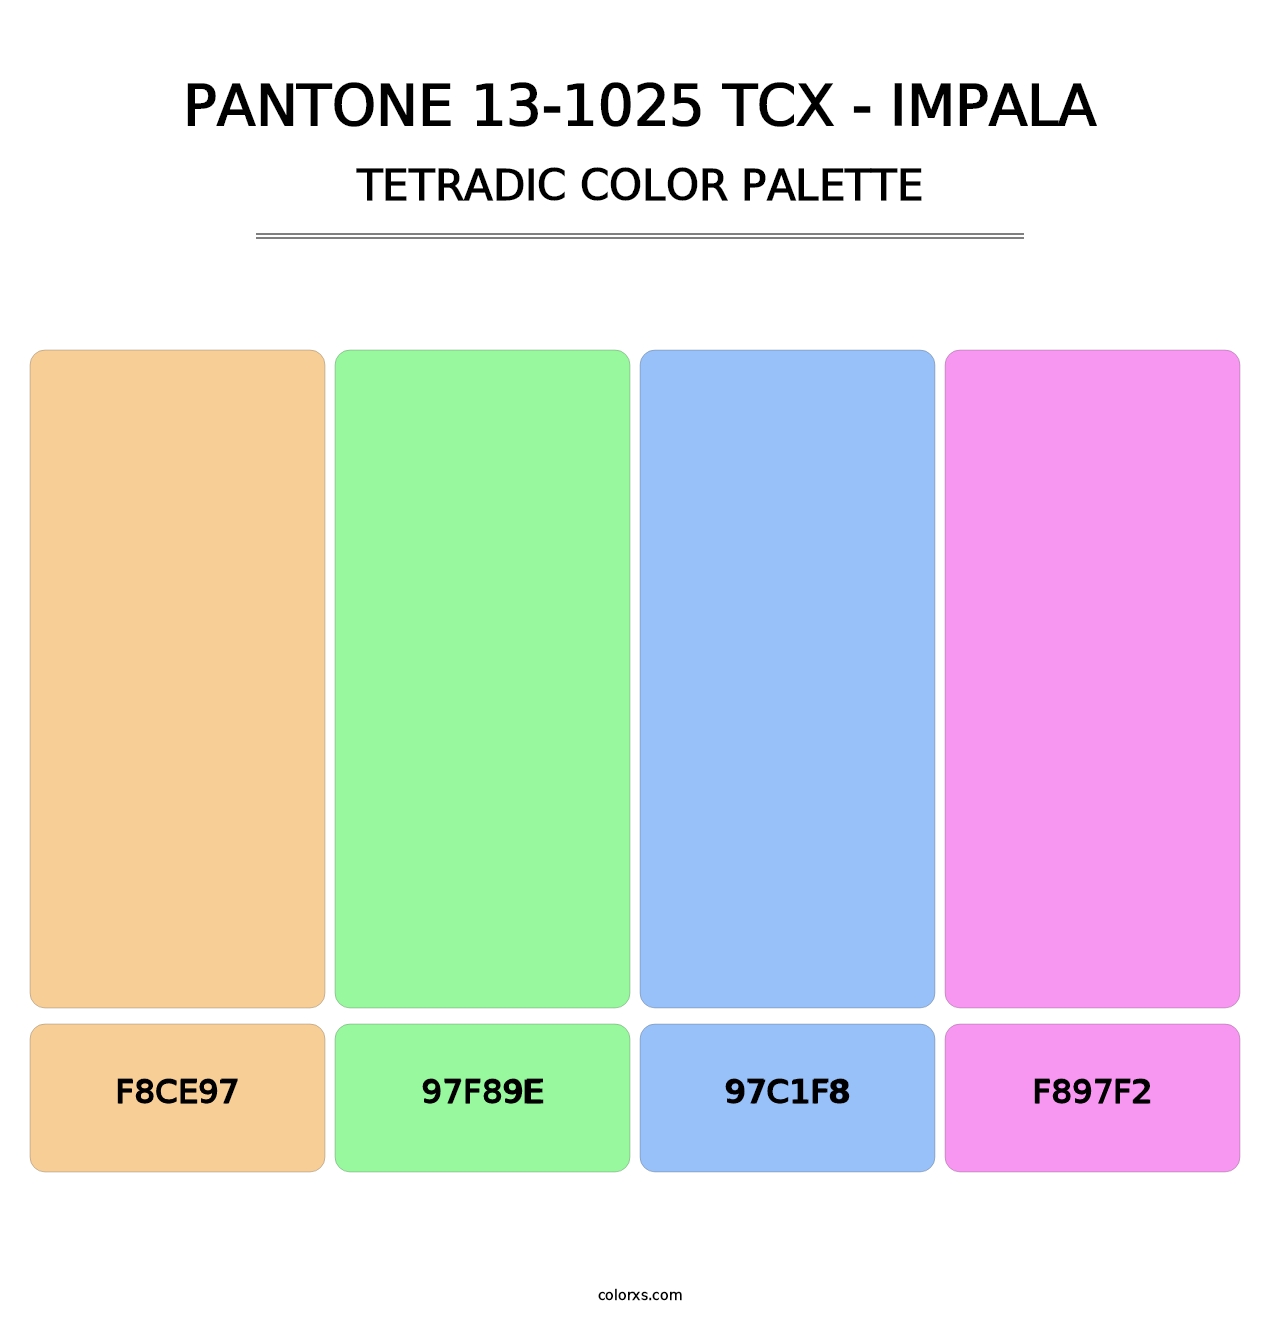 PANTONE 13-1025 TCX - Impala - Tetradic Color Palette